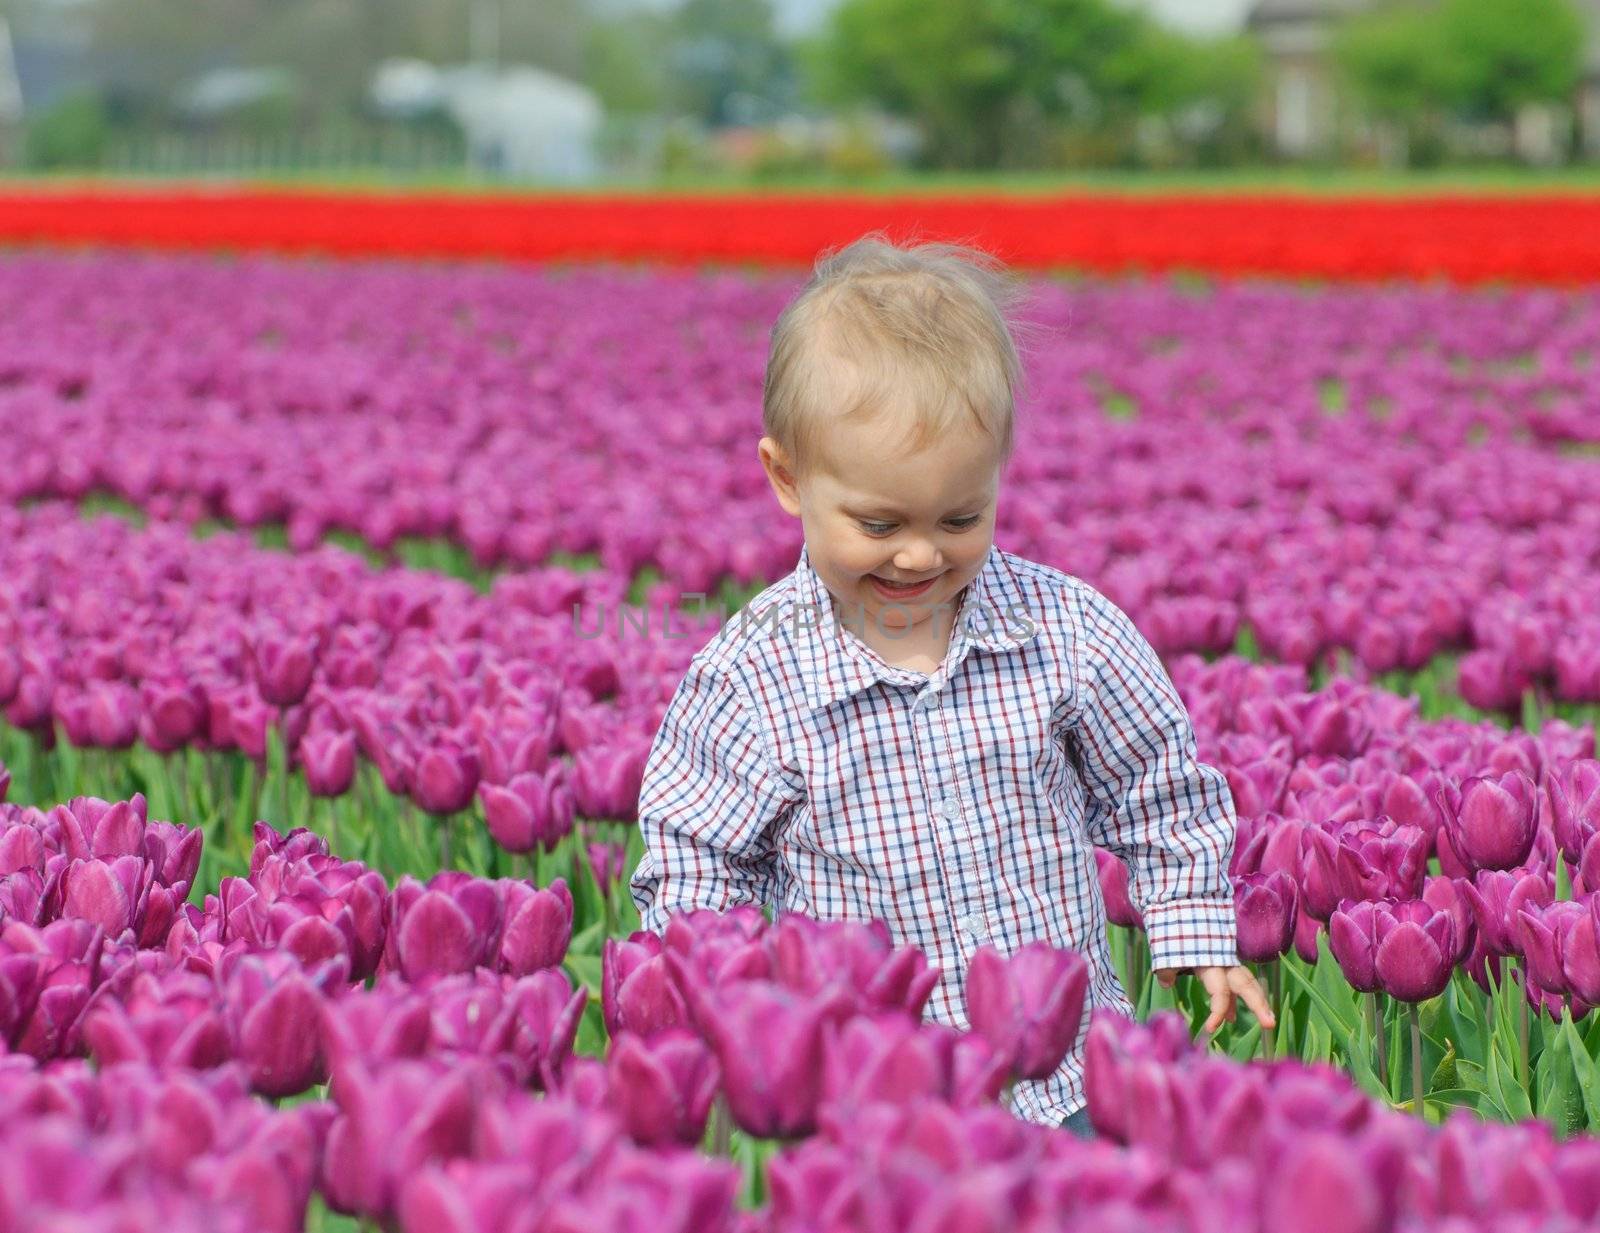 Boy In Tulip Field by maxoliki